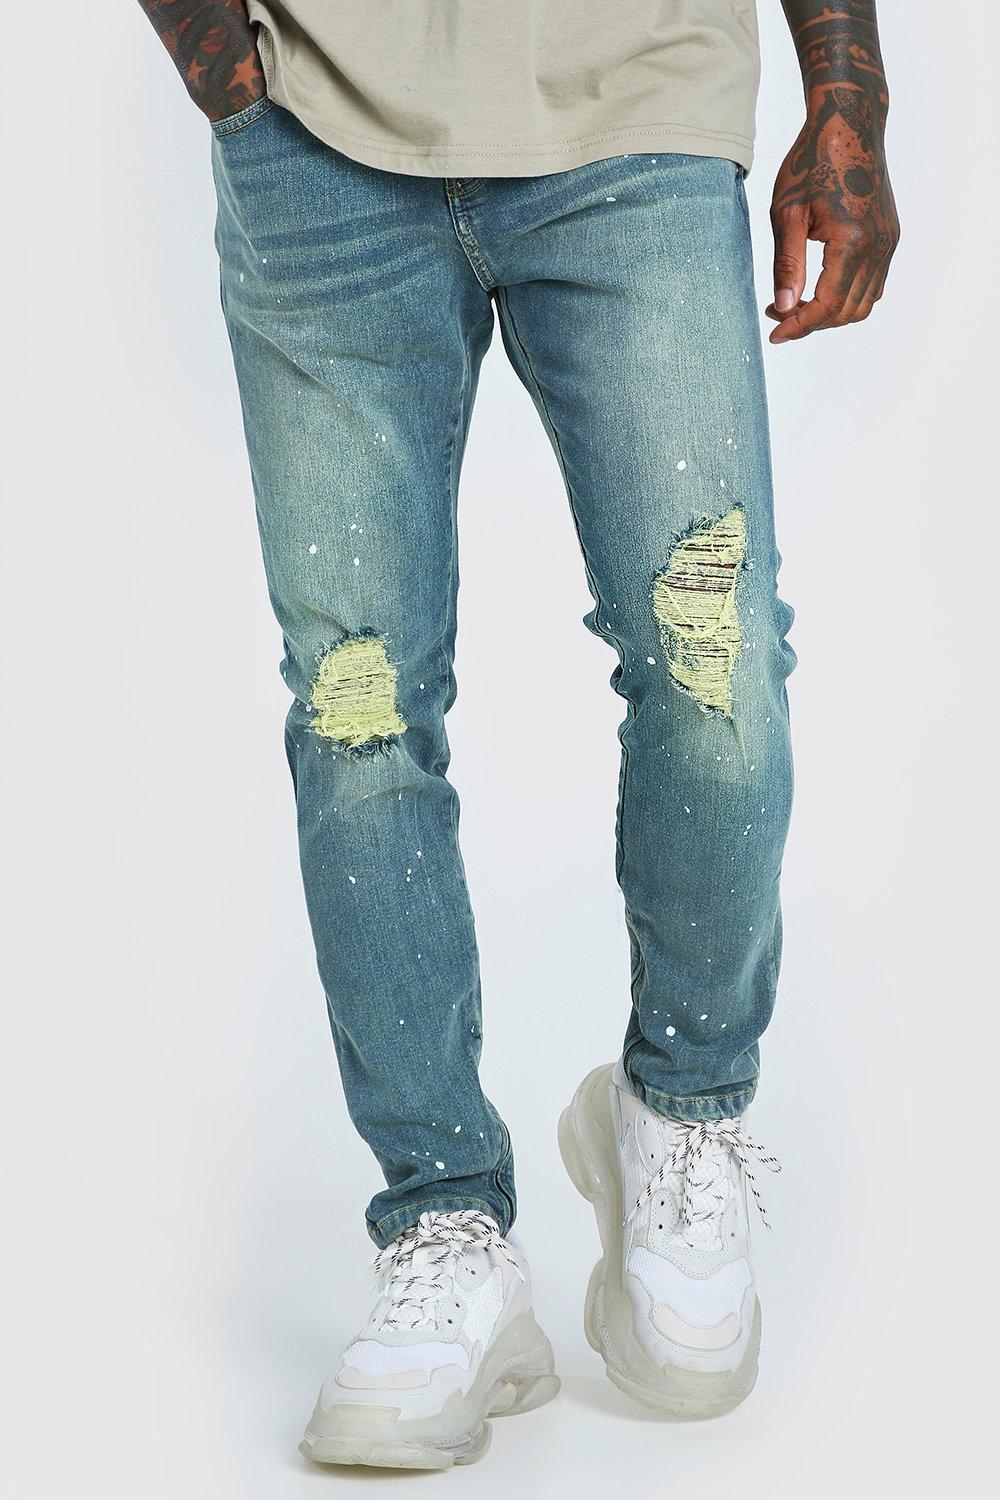 boohoo mens skinny jeans